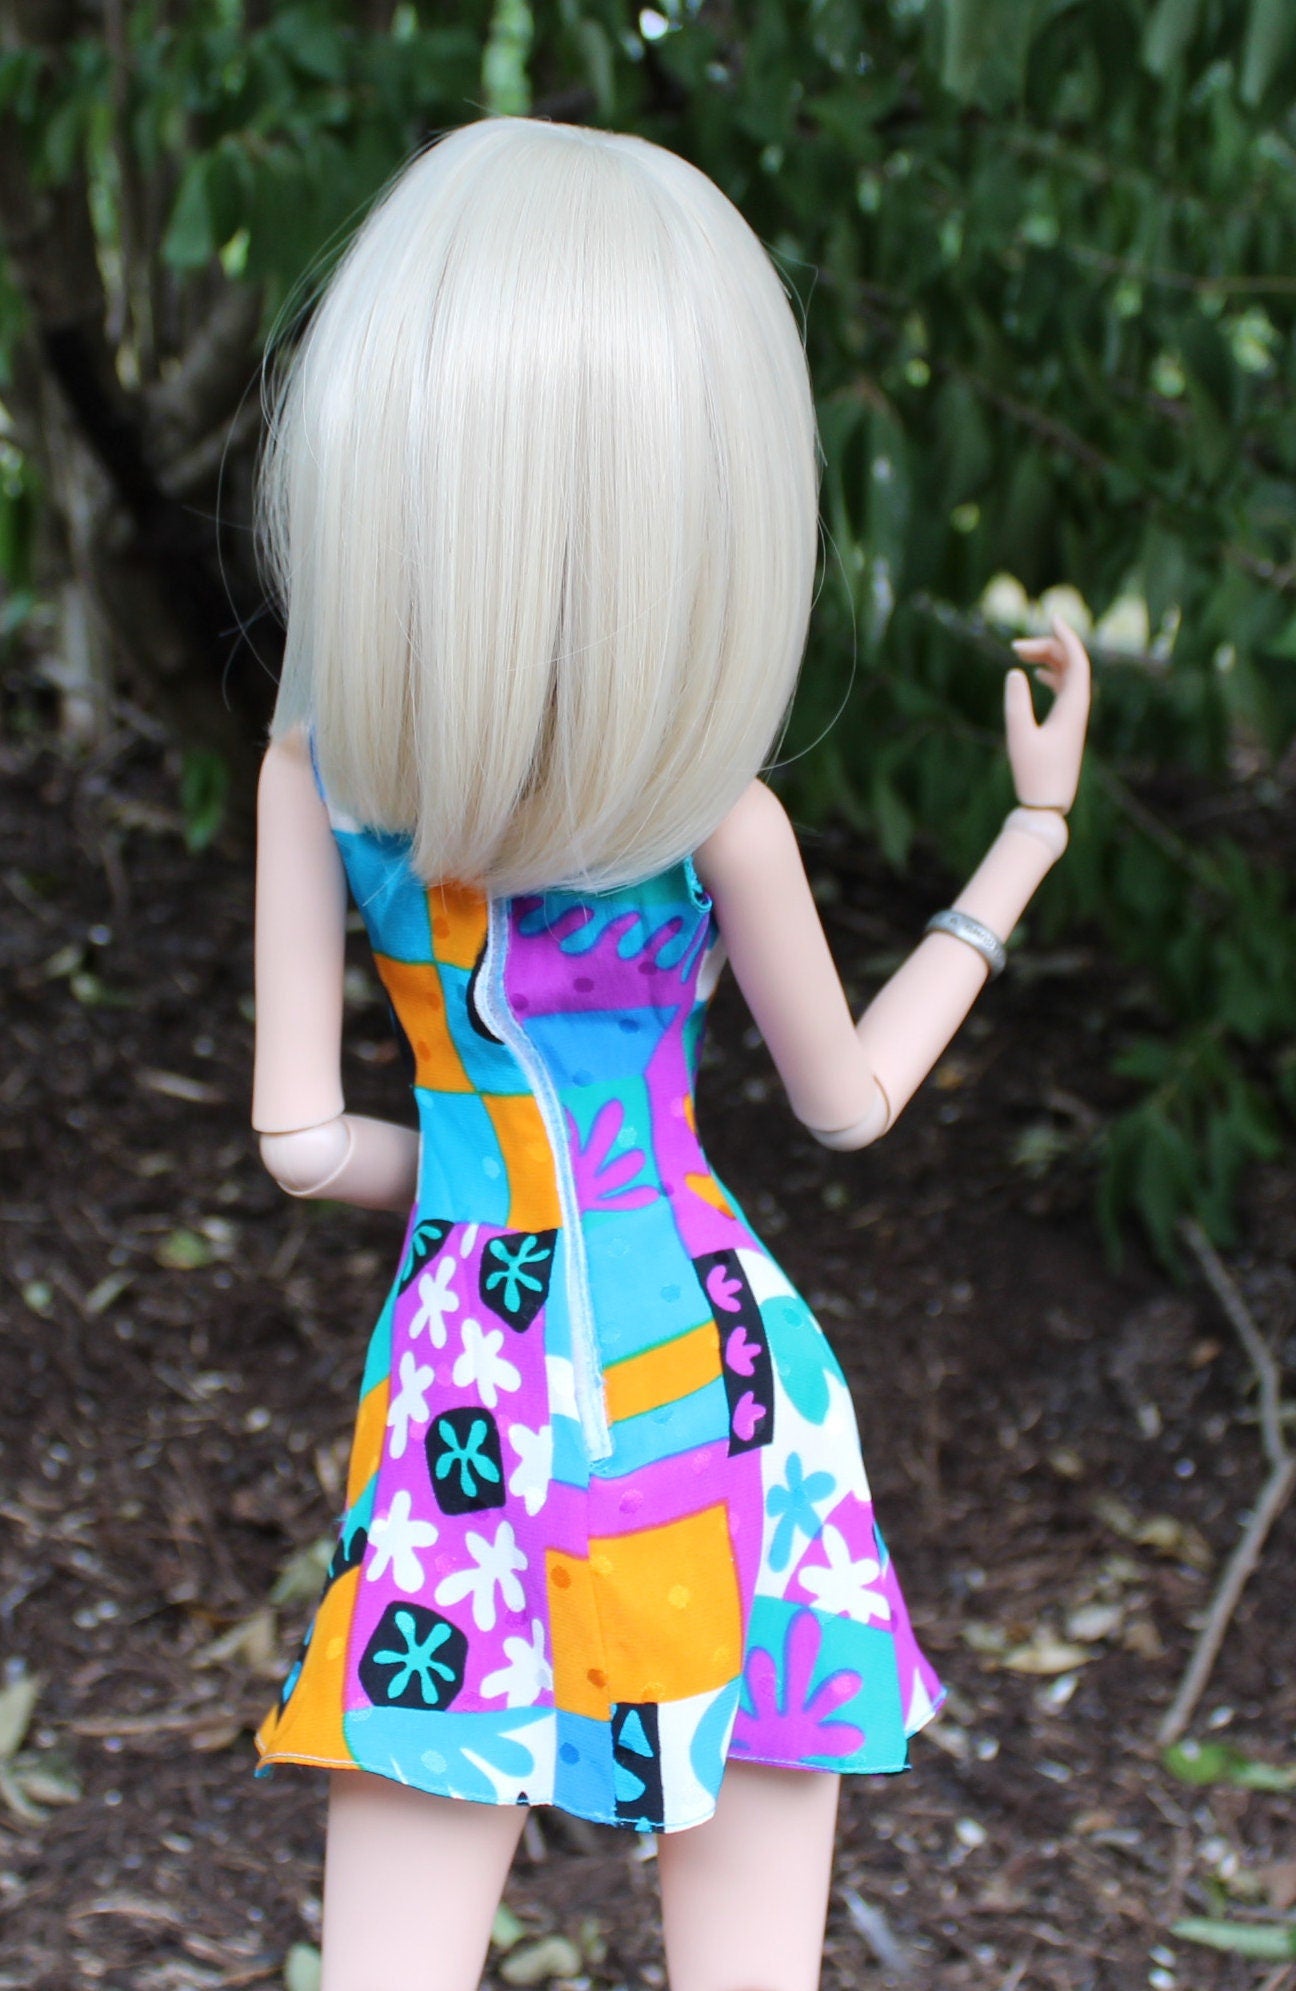 Custom doll Wig for Smart Dolls- Heat Safe - Tangle Resistant- 8.5" head size of Bjd, SD, Dollfie Dream dolls bleach blonde bangs